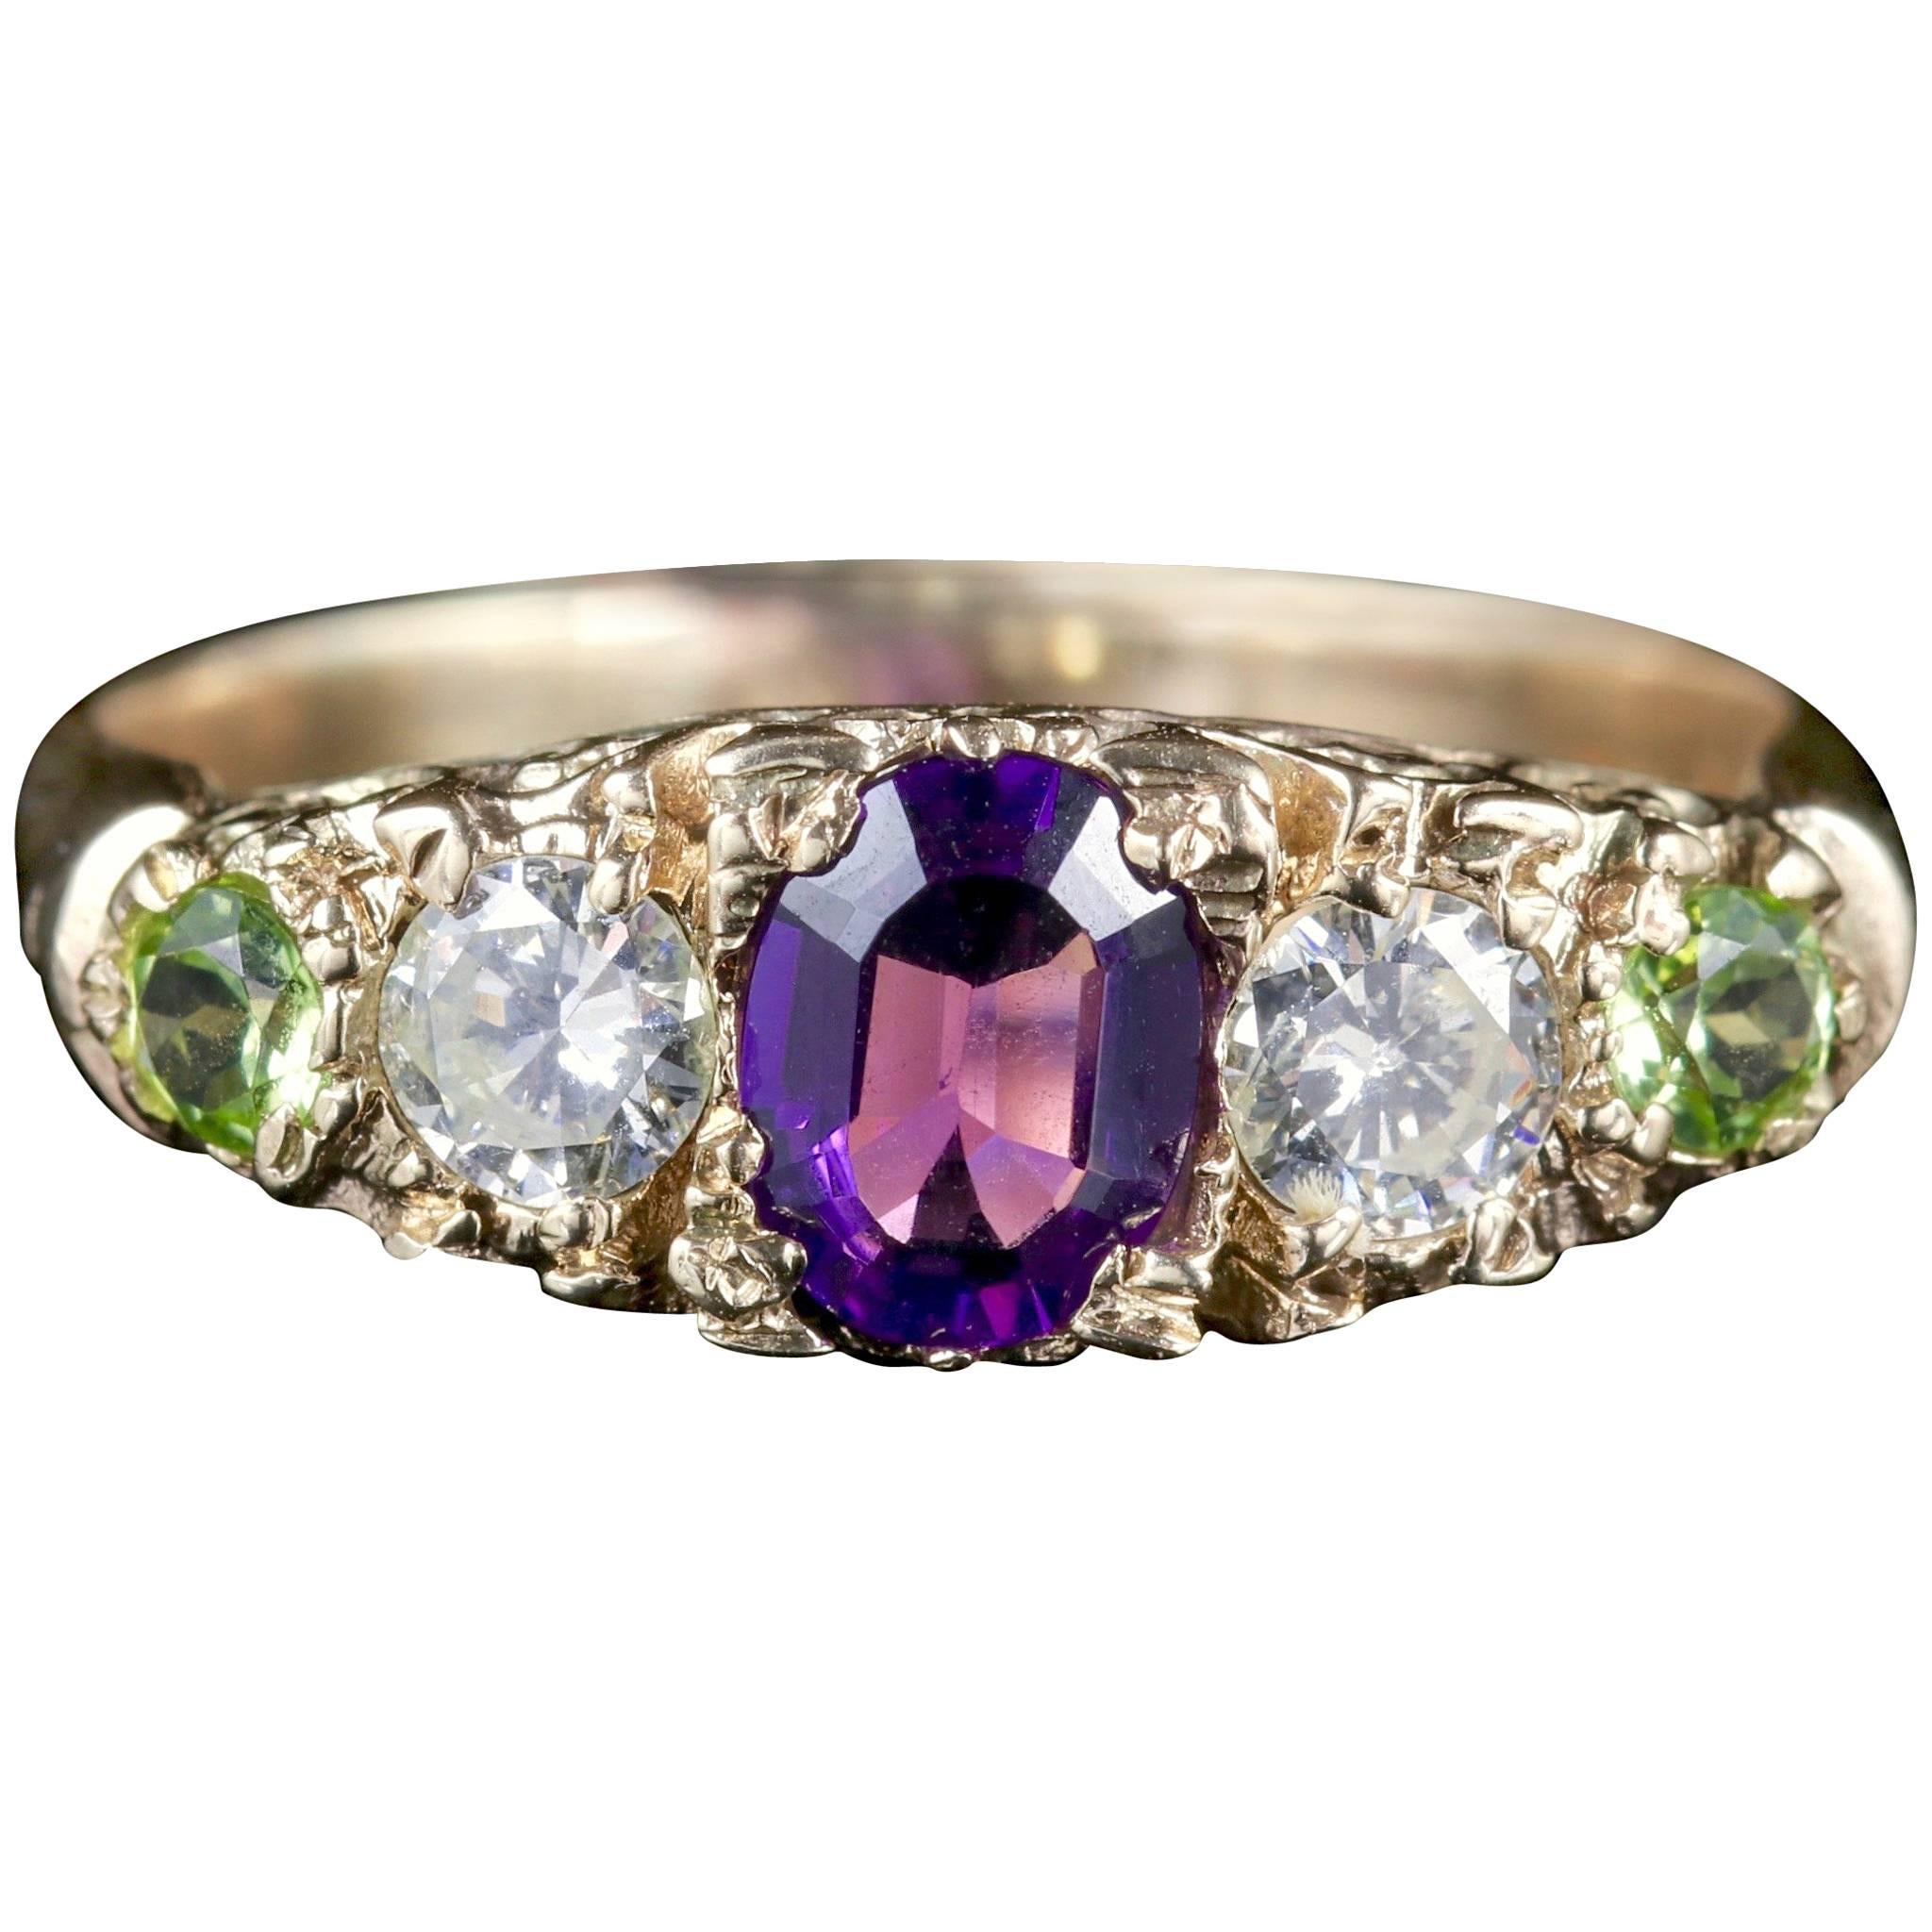 Antique Victorian Suffragette Ring Diamond Amethyst Peridot, circa 1900